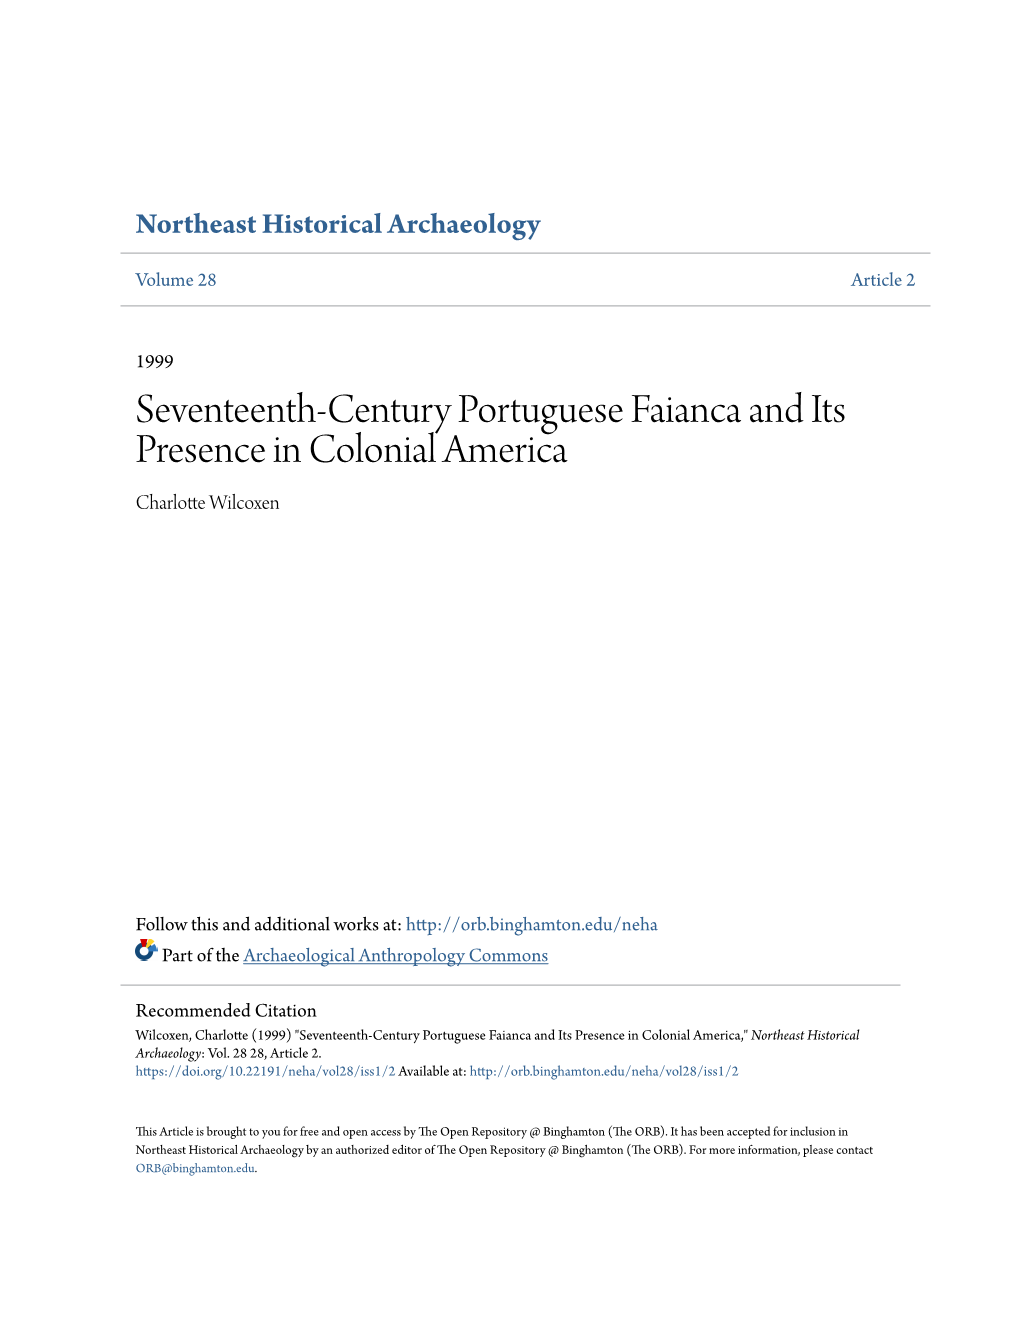 Seventeenth-Century Portuguese Faianca and Its Presence in Colonial America Charlotte Wilcoxen